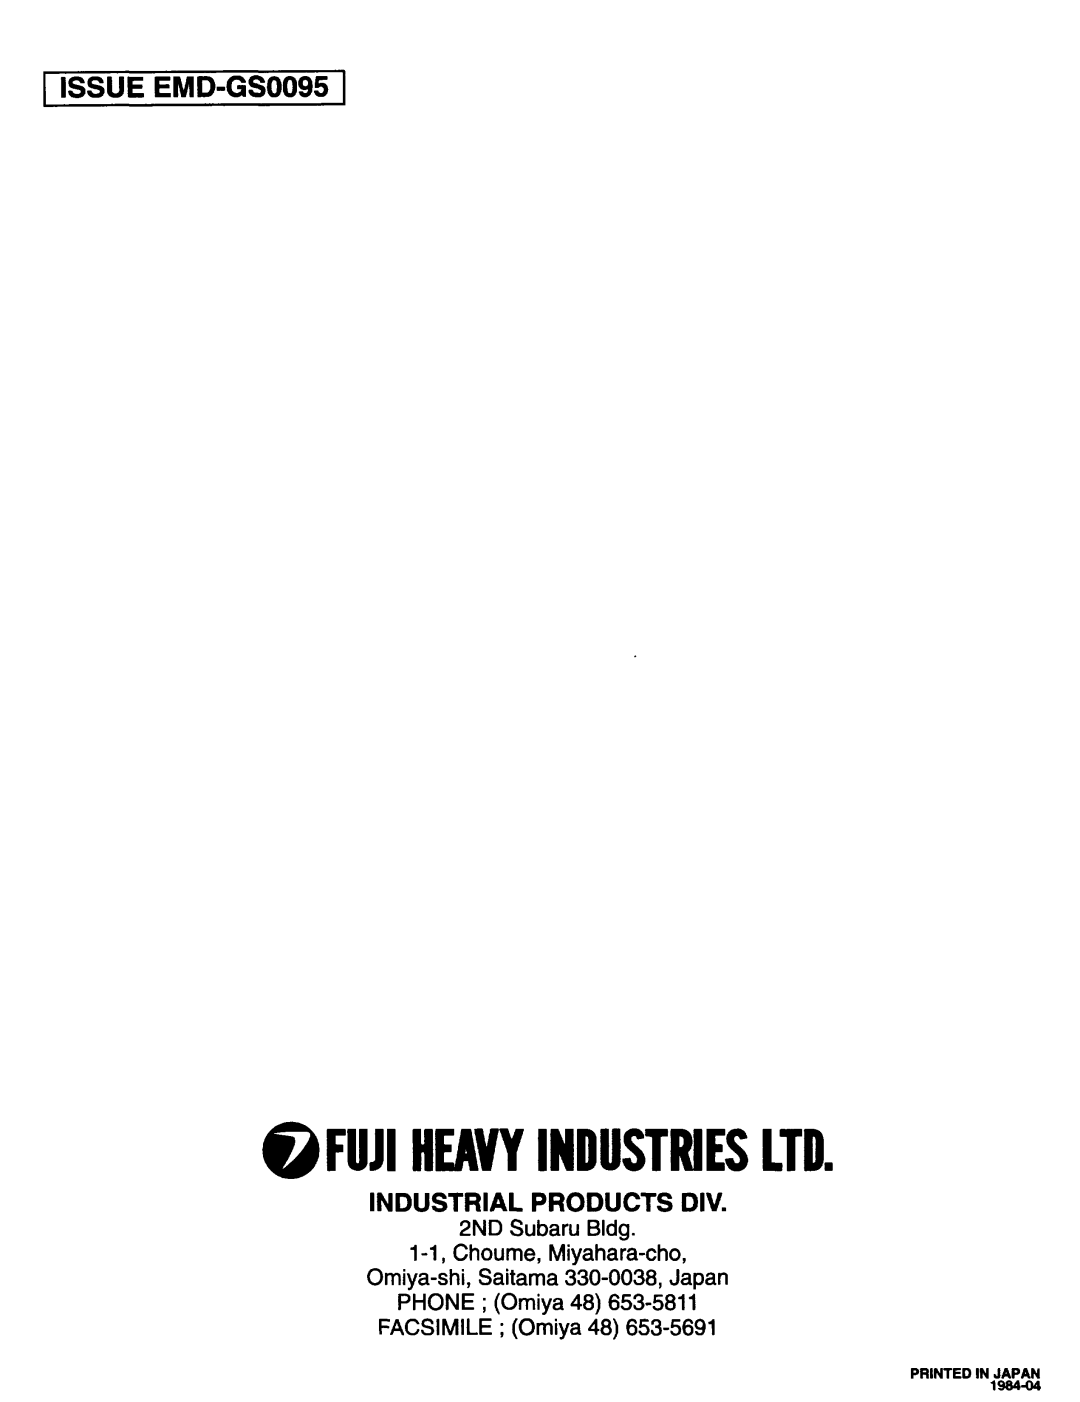 Subaru Robin Power Products R1200 service manual @Fuji-Heavyindustriesltd, ISSUE EMD-GS00951, Industrial Products Div 